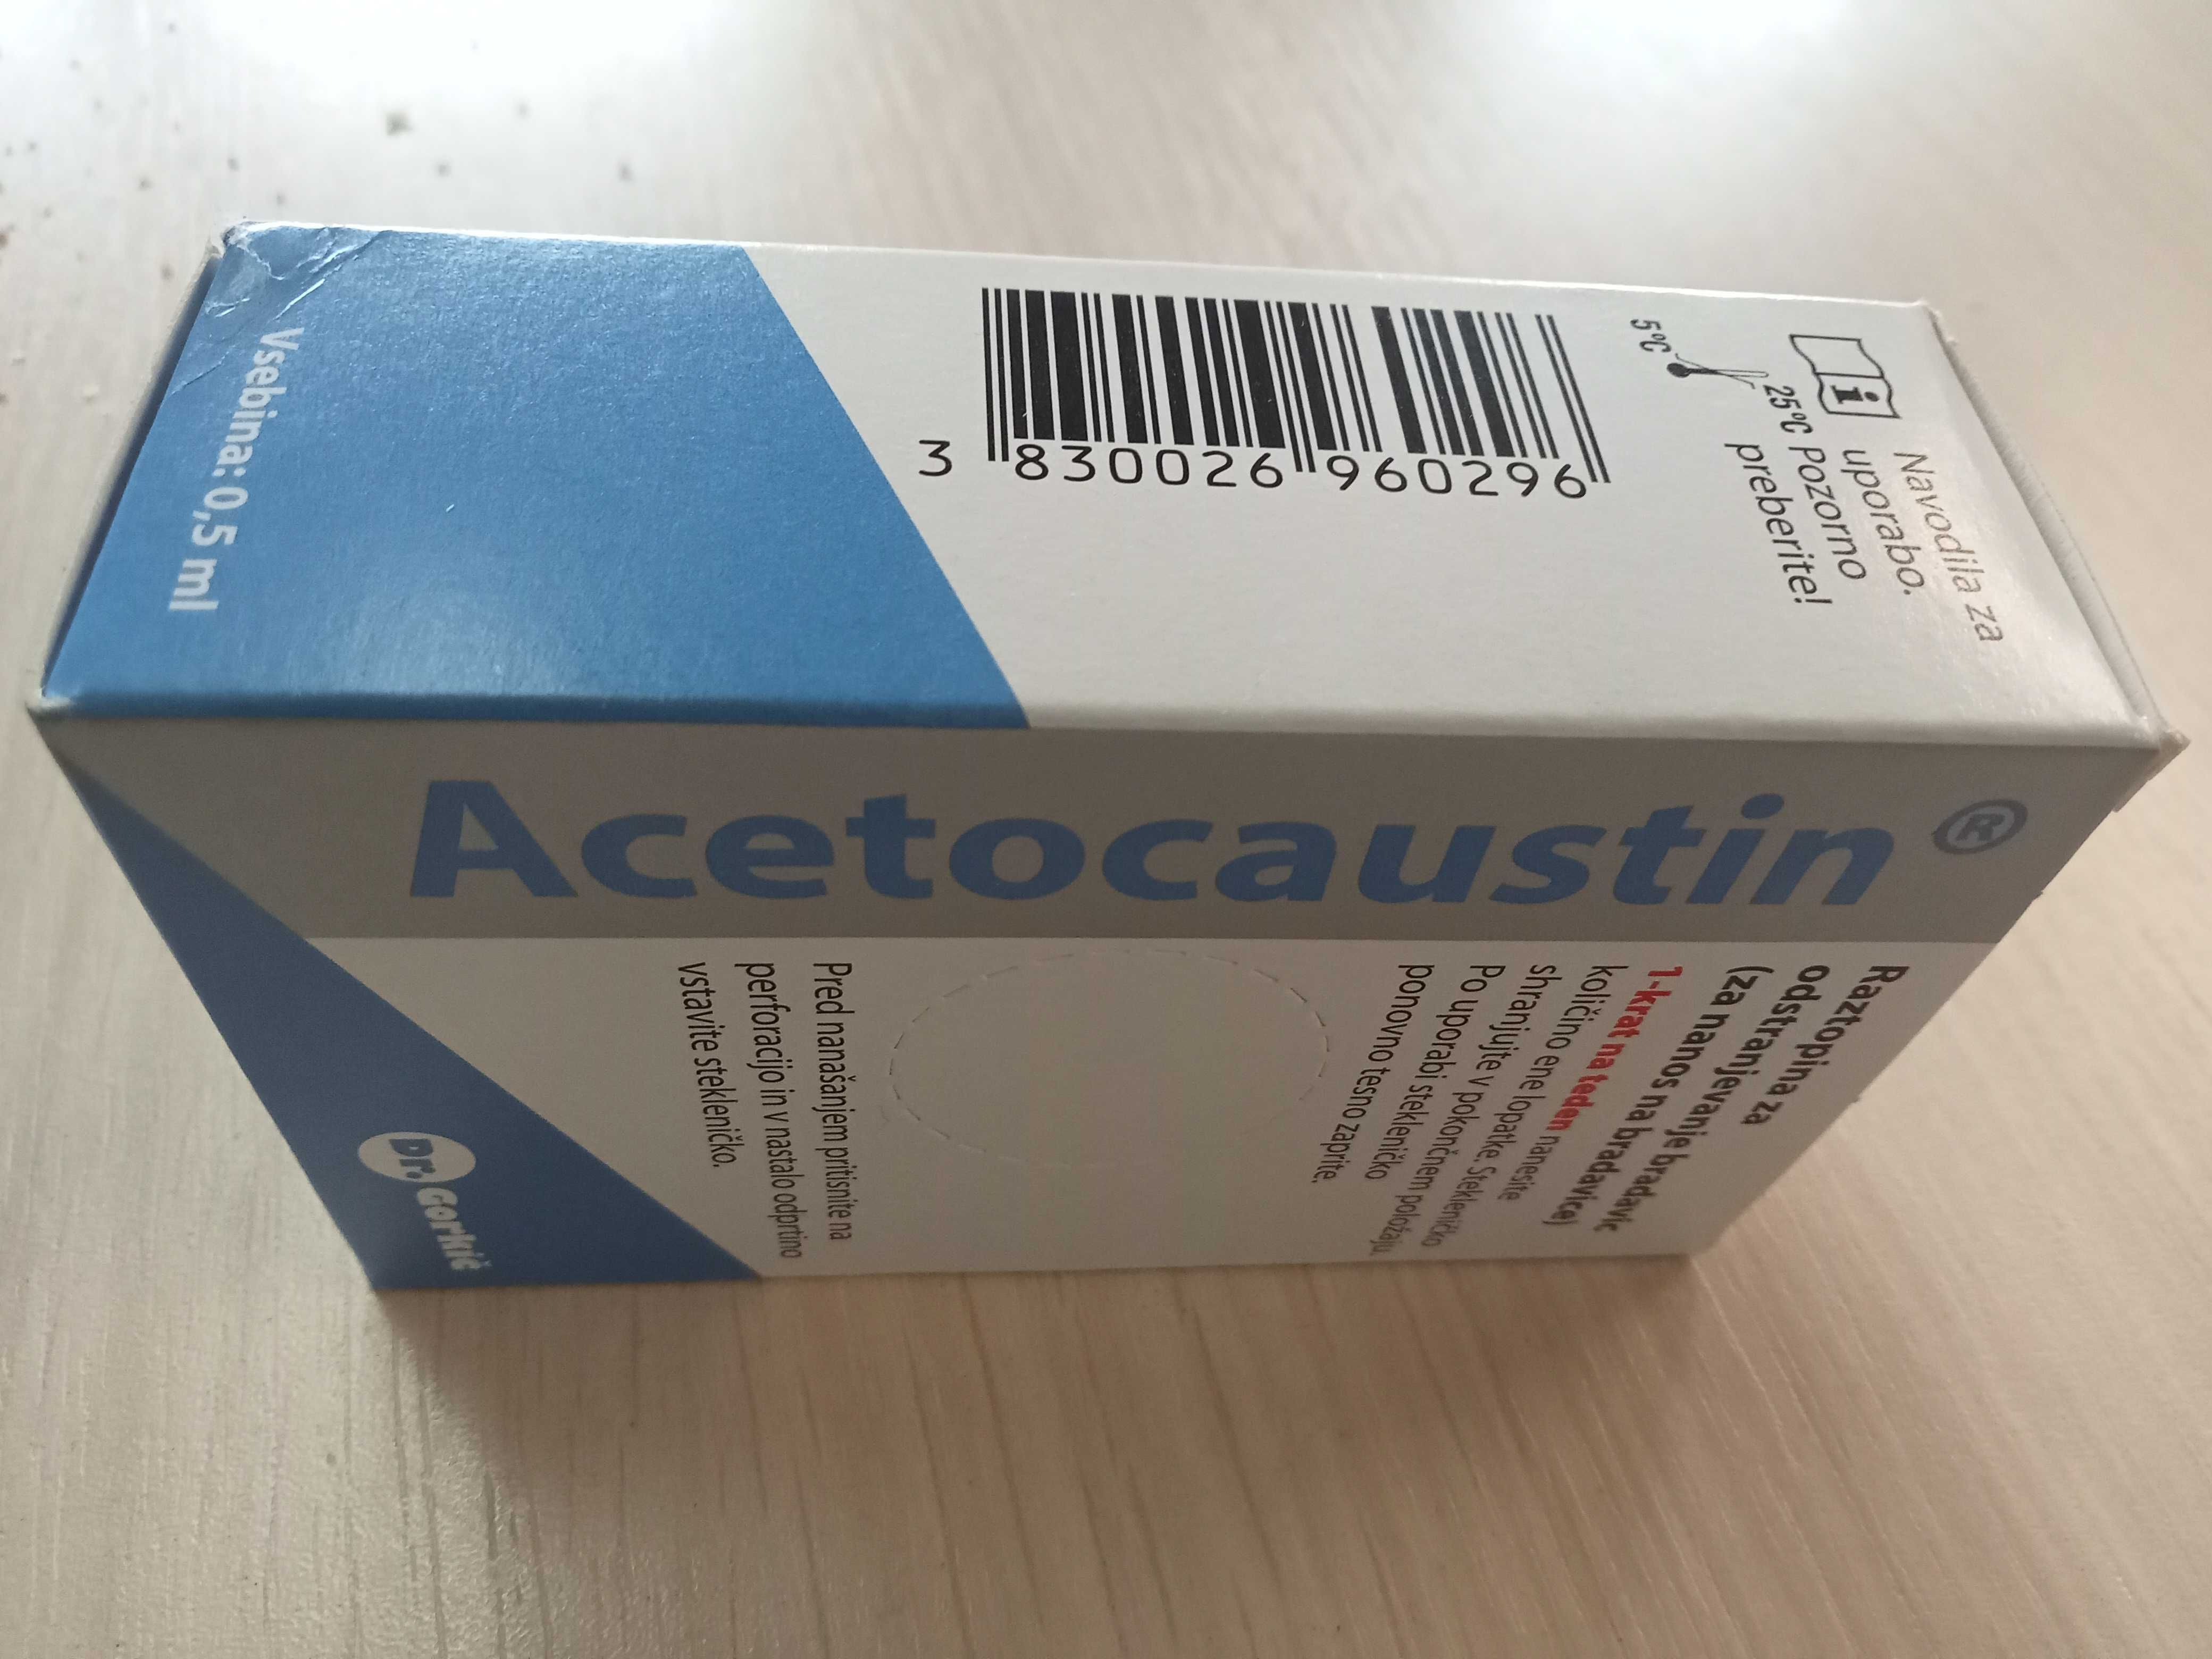 Acetocaustin = Vericaust